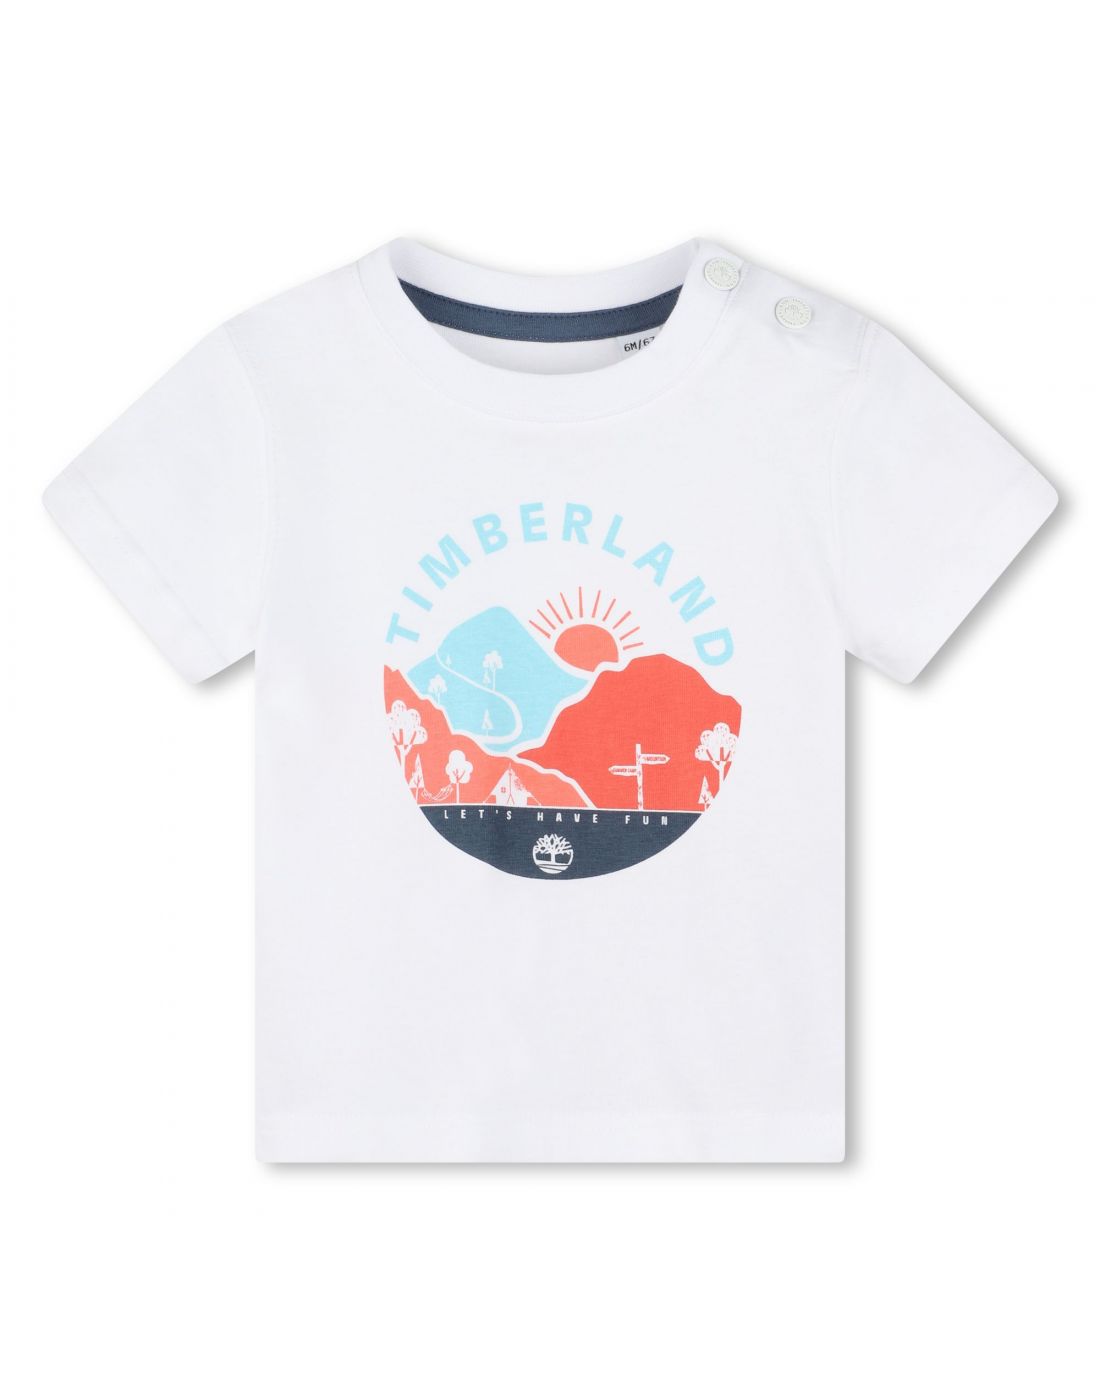 Timberlnad  Boys T-shirt